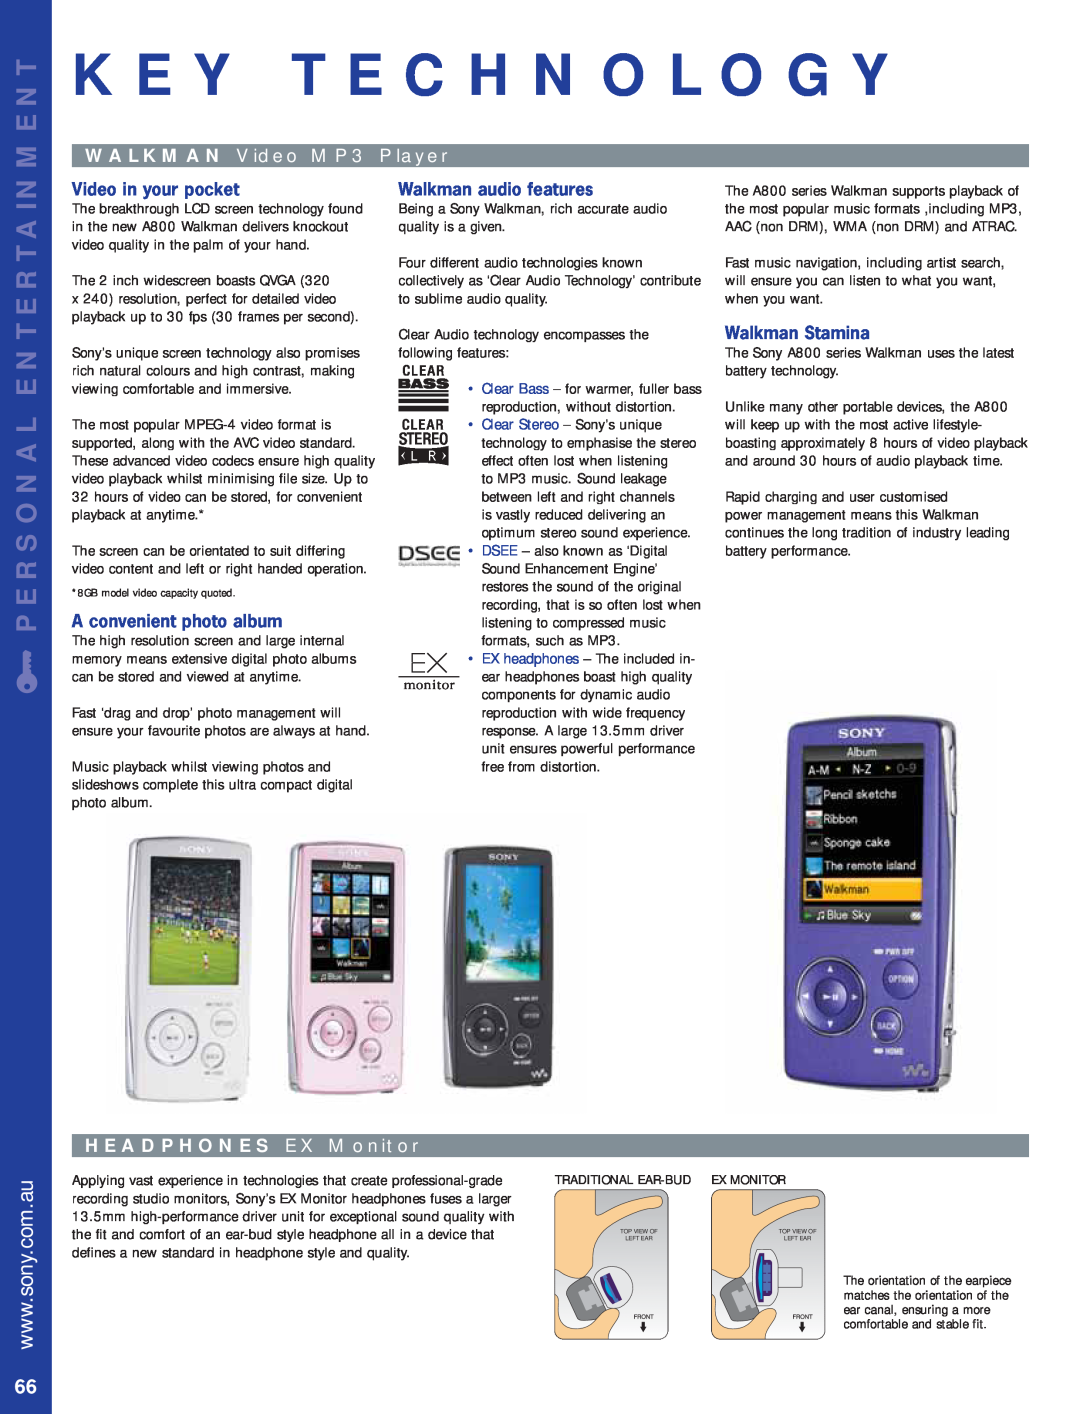 Sony Bravia LCD TV manual WALKMAN Video MP3 Player, HEADPHONES EX Monitor, Key Technology, q PERSONAL ENTERTAINMENT 